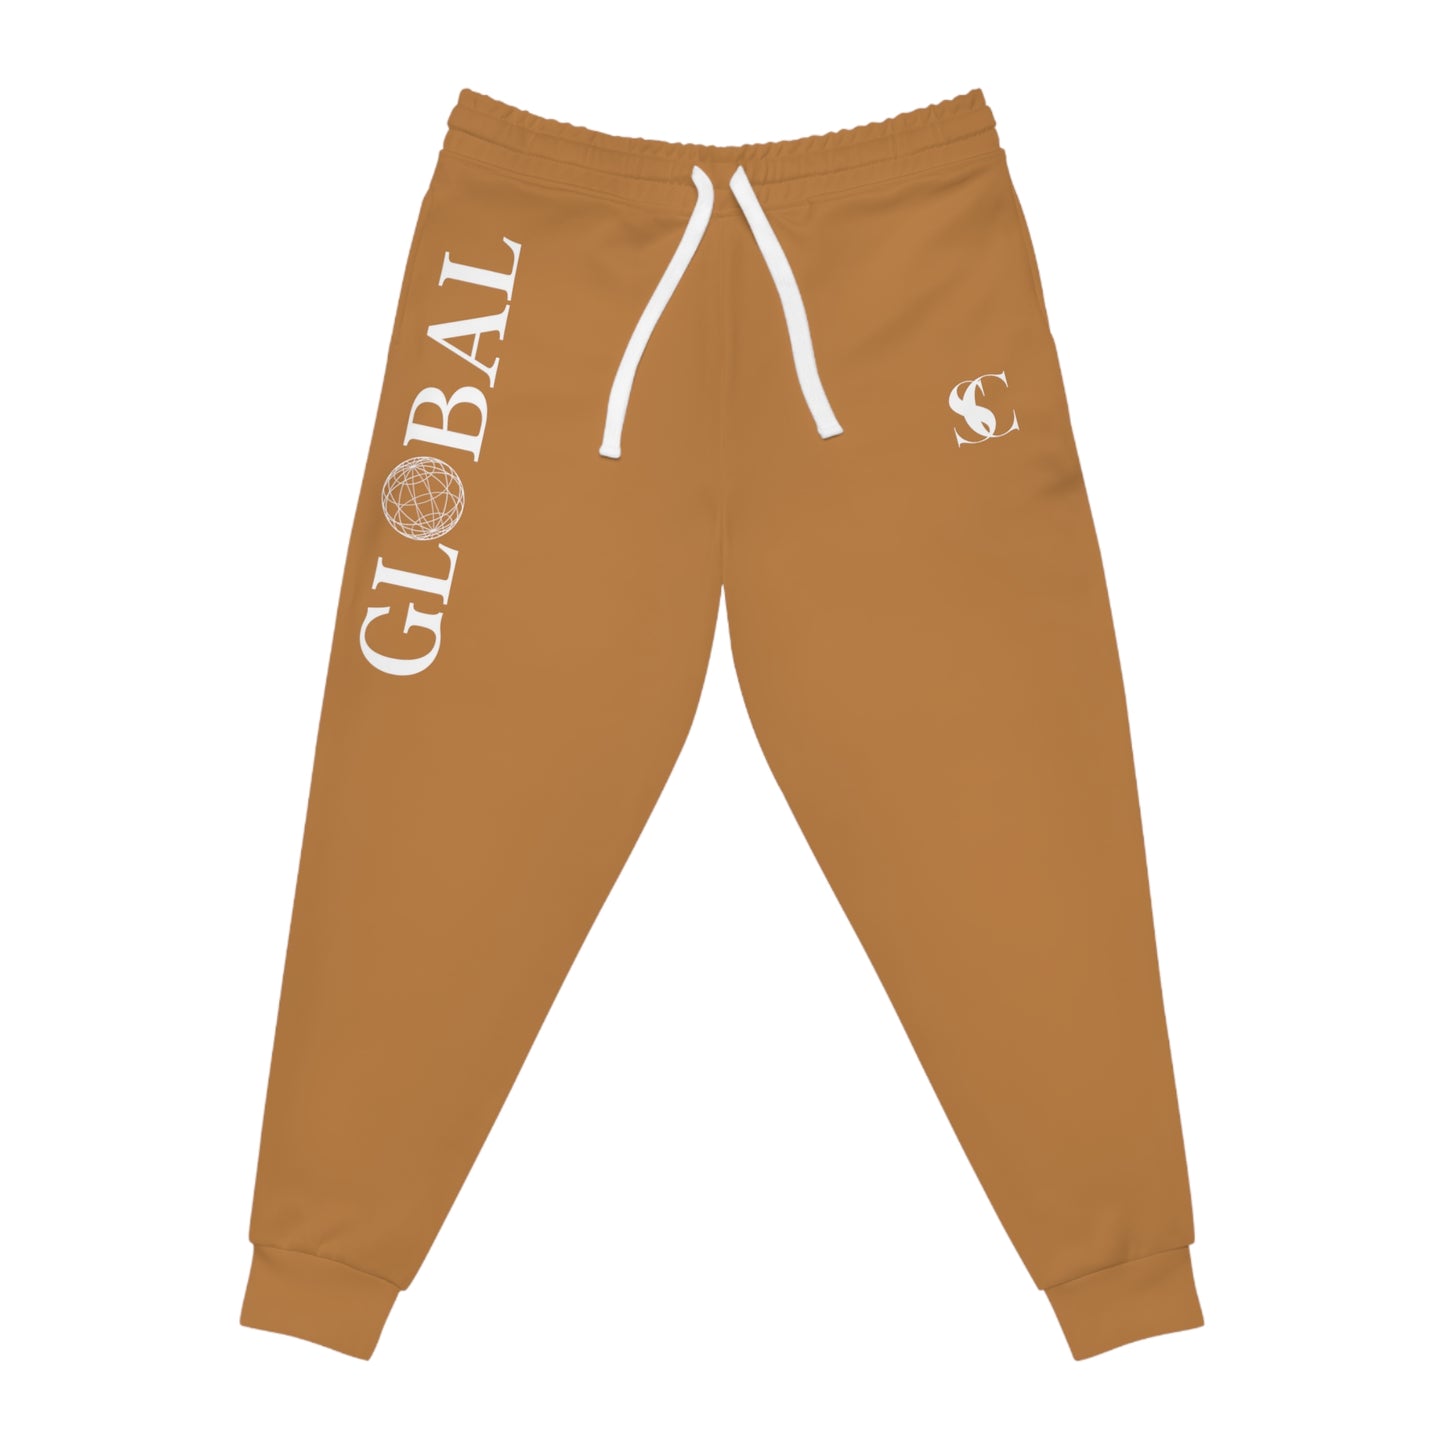 Women's Global sweatpants - Light brown